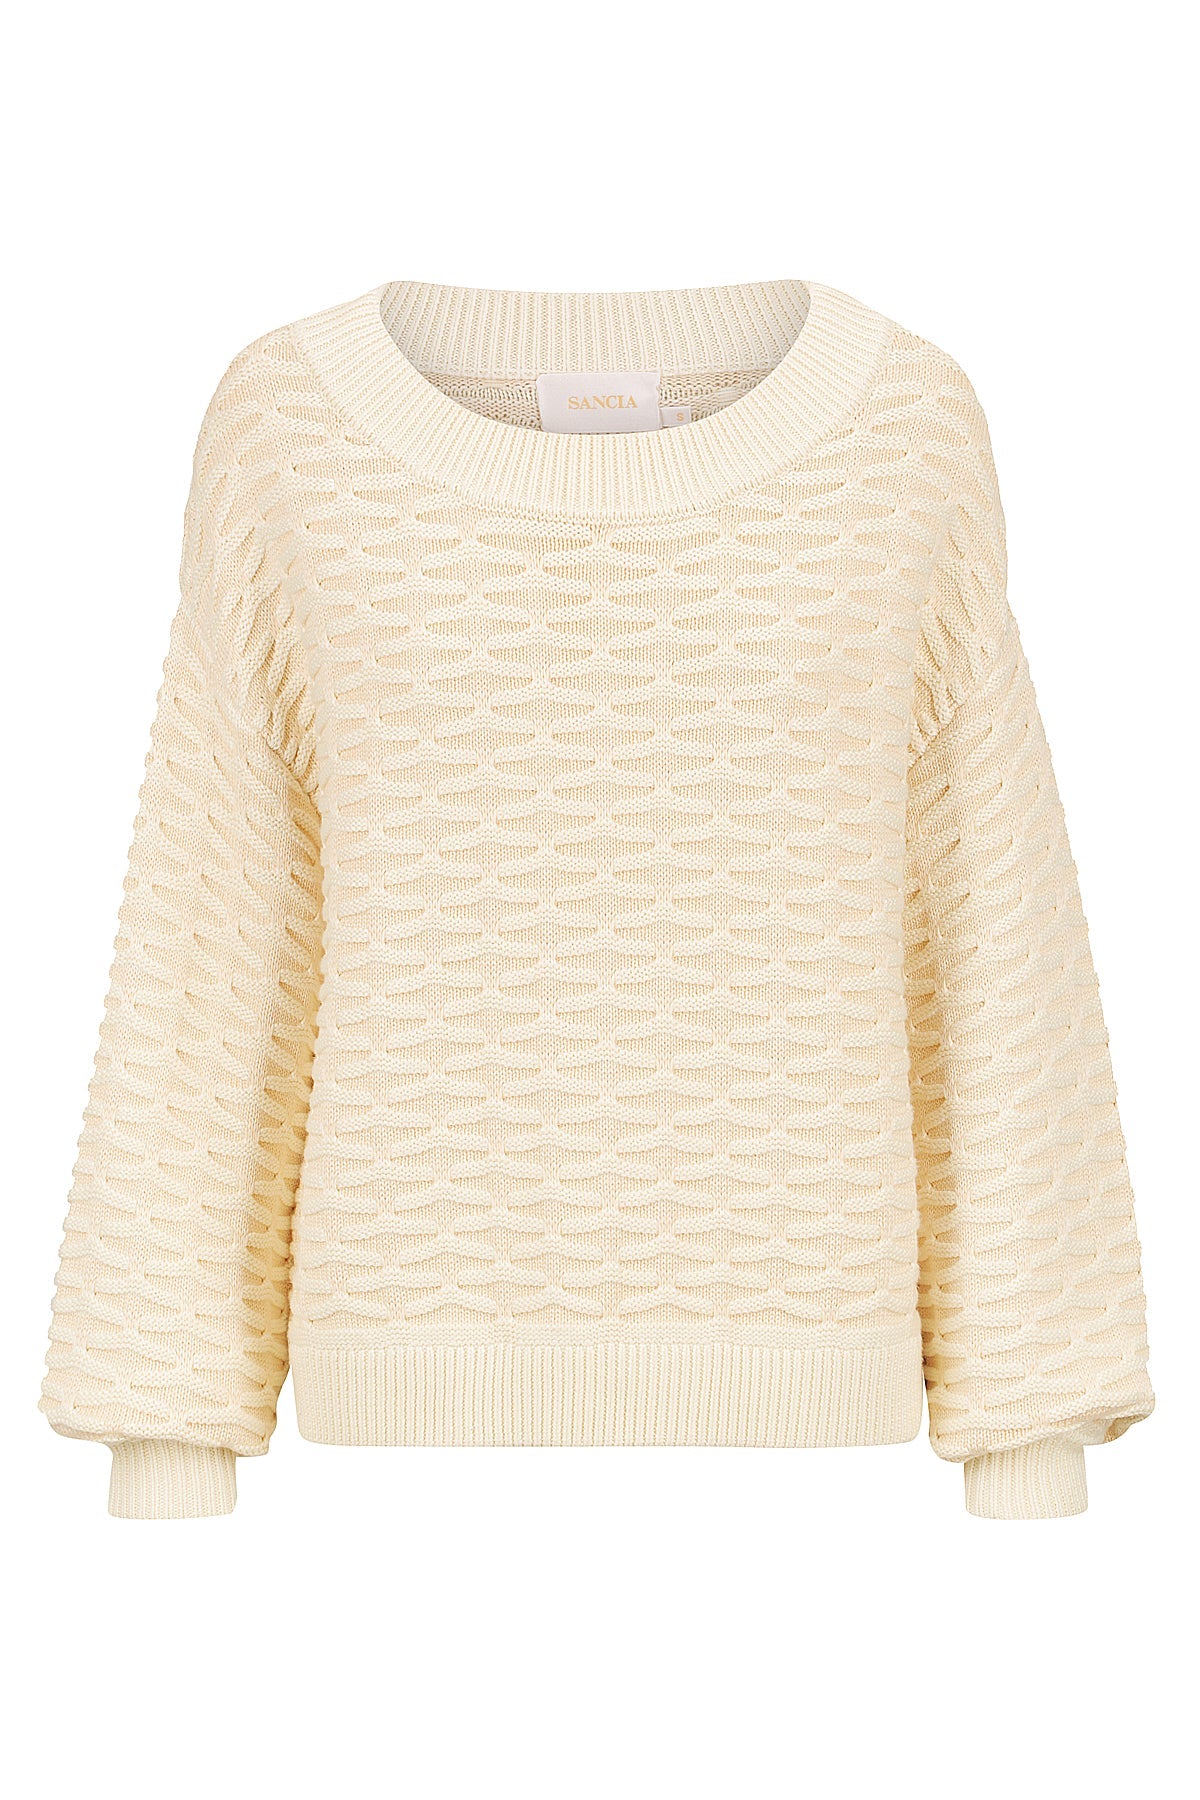 Cream basket weave knitted scoop neck jumper with subtle blouson sleeves